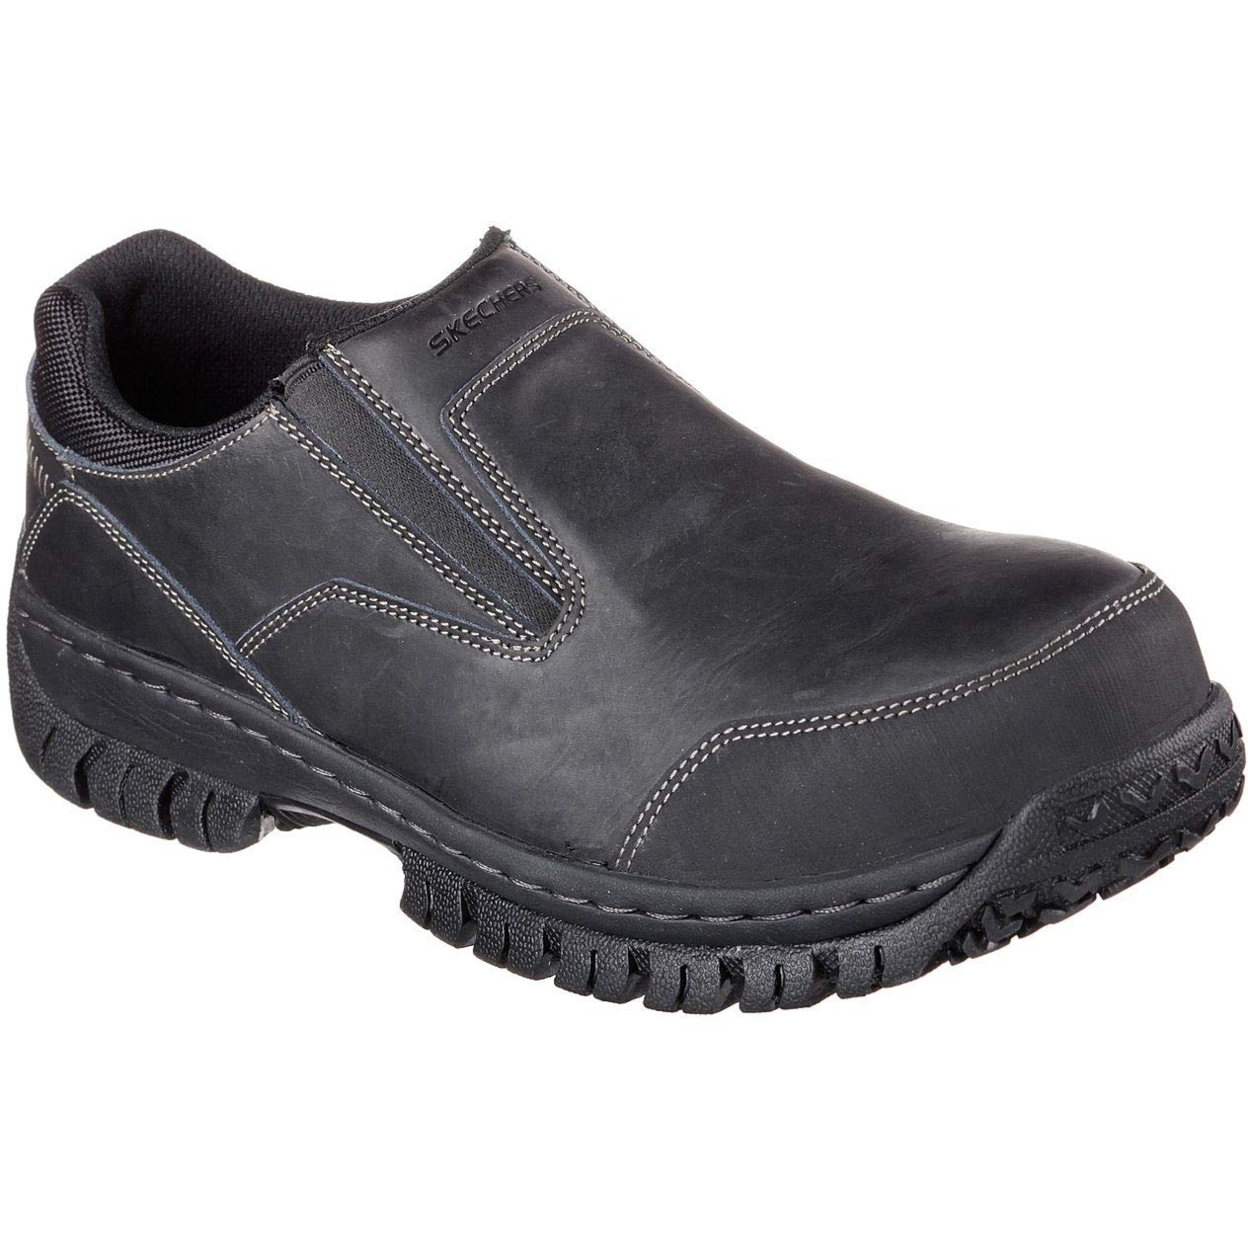 Skechers For Work Men's Hartan Steel Toe Slip-On Shoe Varies BLACK - BLACK, 9.5